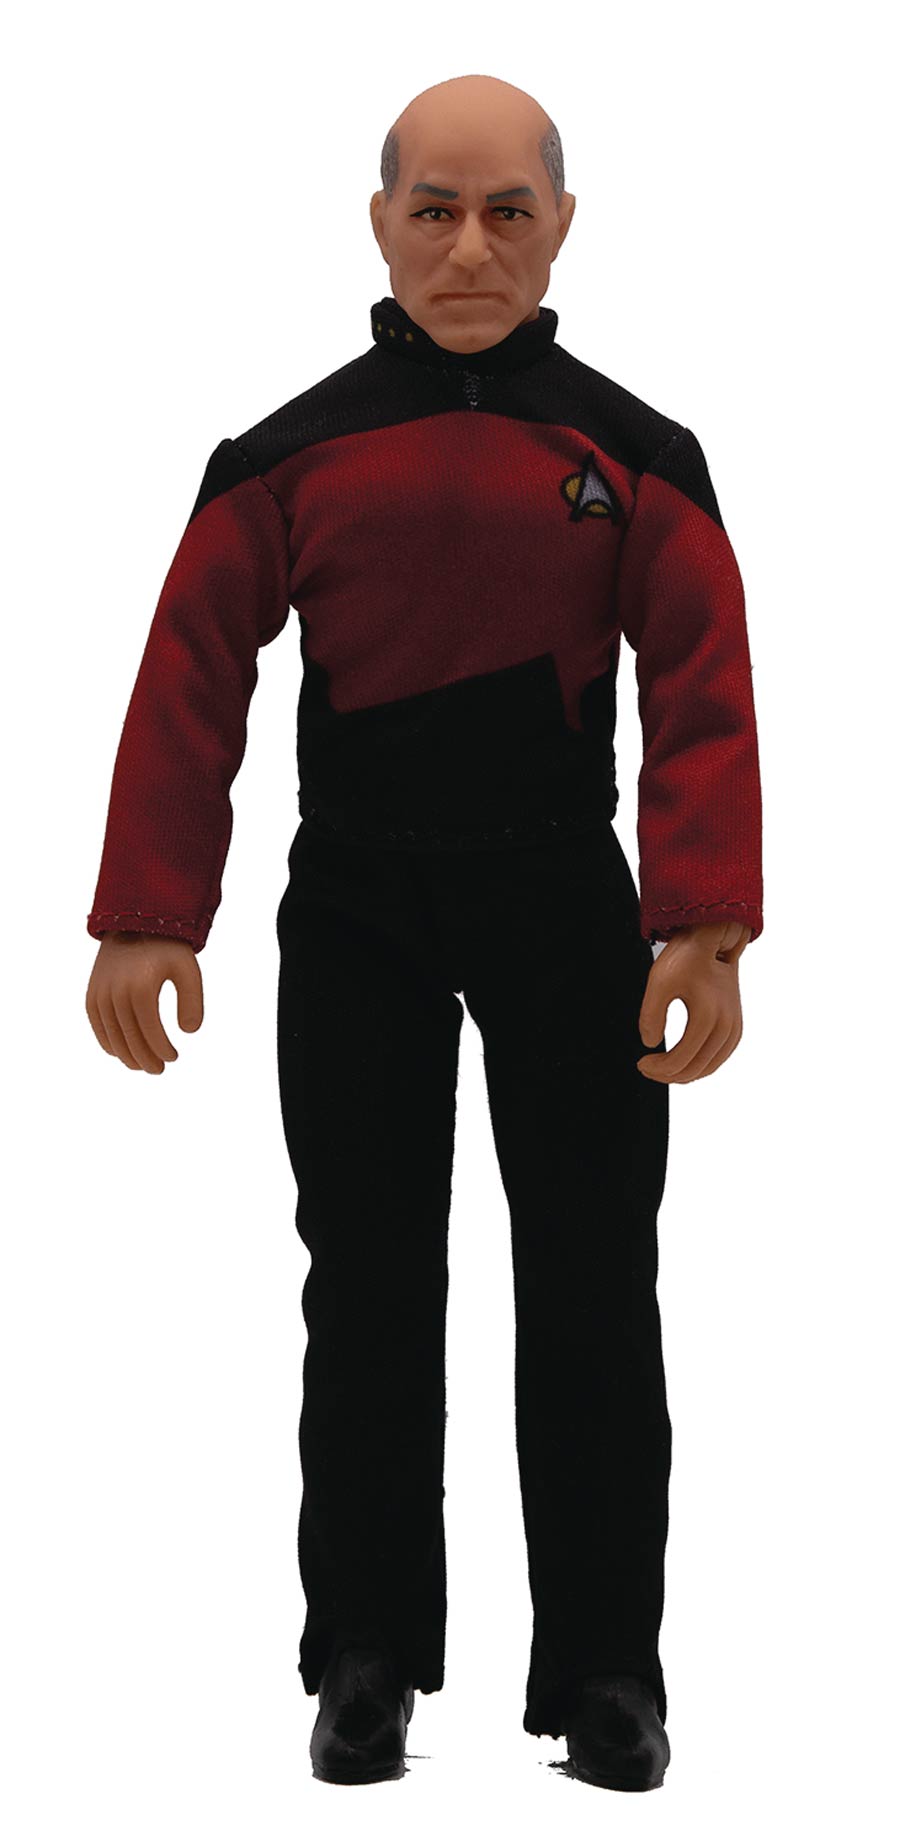 Mego Sci-Fi Star Trek The Next Generation 8-Inch Action Figure - Captain Jean-Luc Picard